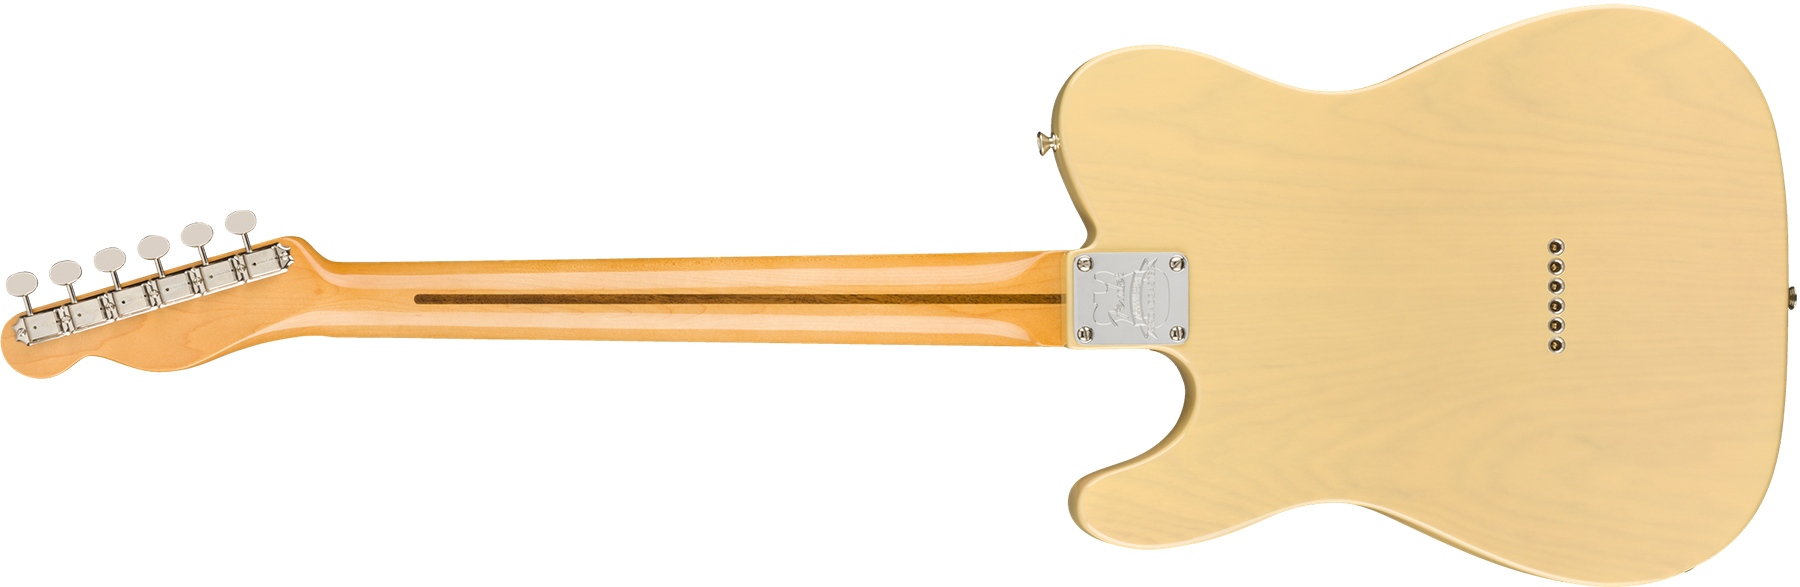 Fender Tele Broadcaster 70th Anniversary Usa Mn - Blackguard Blonde - Guitarra eléctrica con forma de tel - Variation 1